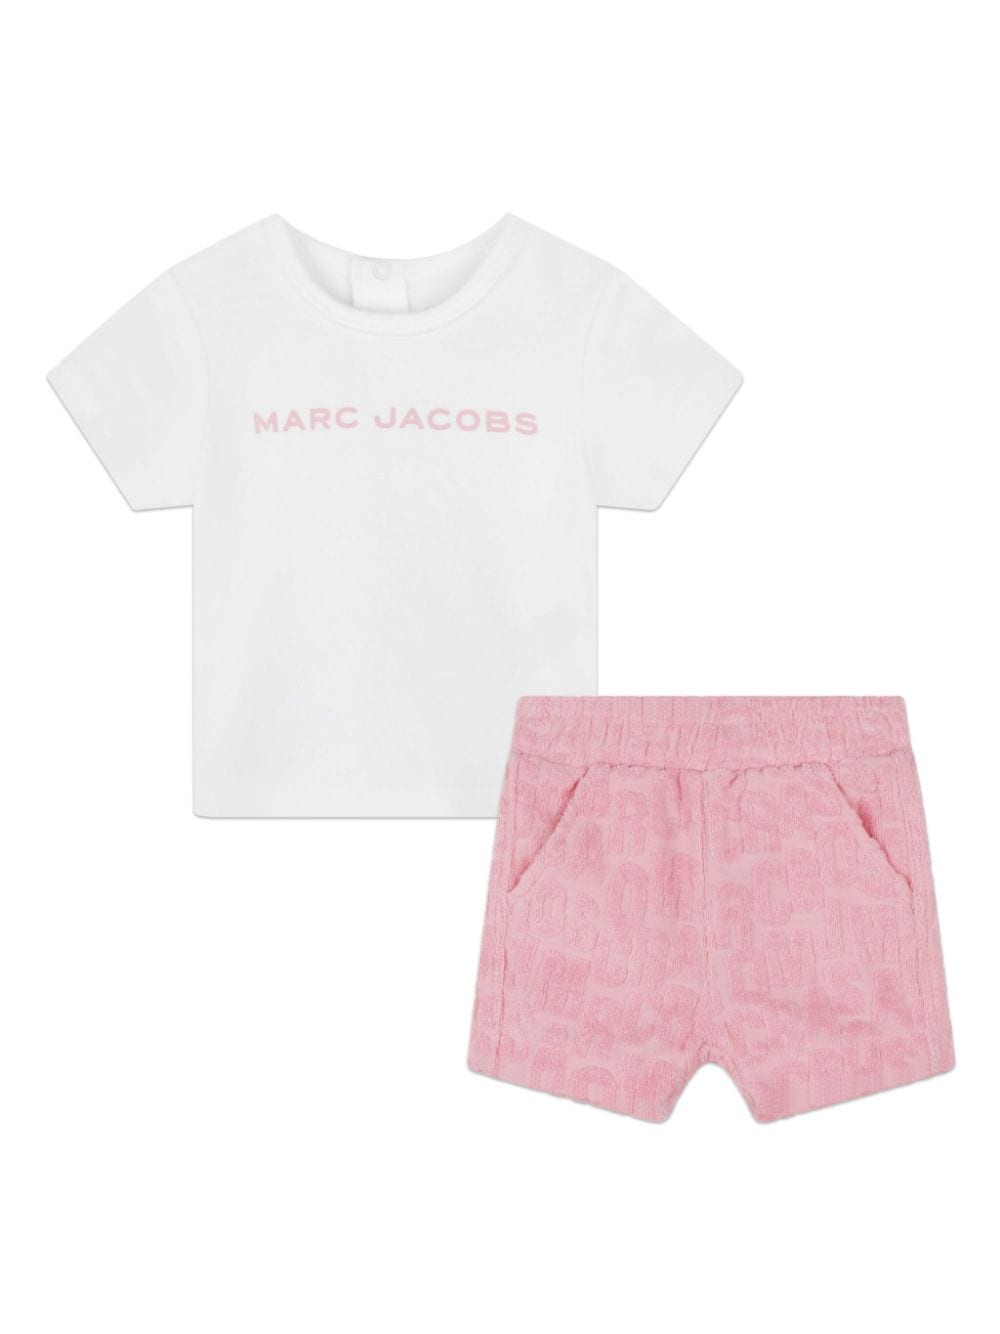 Marc Jacobs Kids logo-print cotton-blend shorts set - Pink von Marc Jacobs Kids